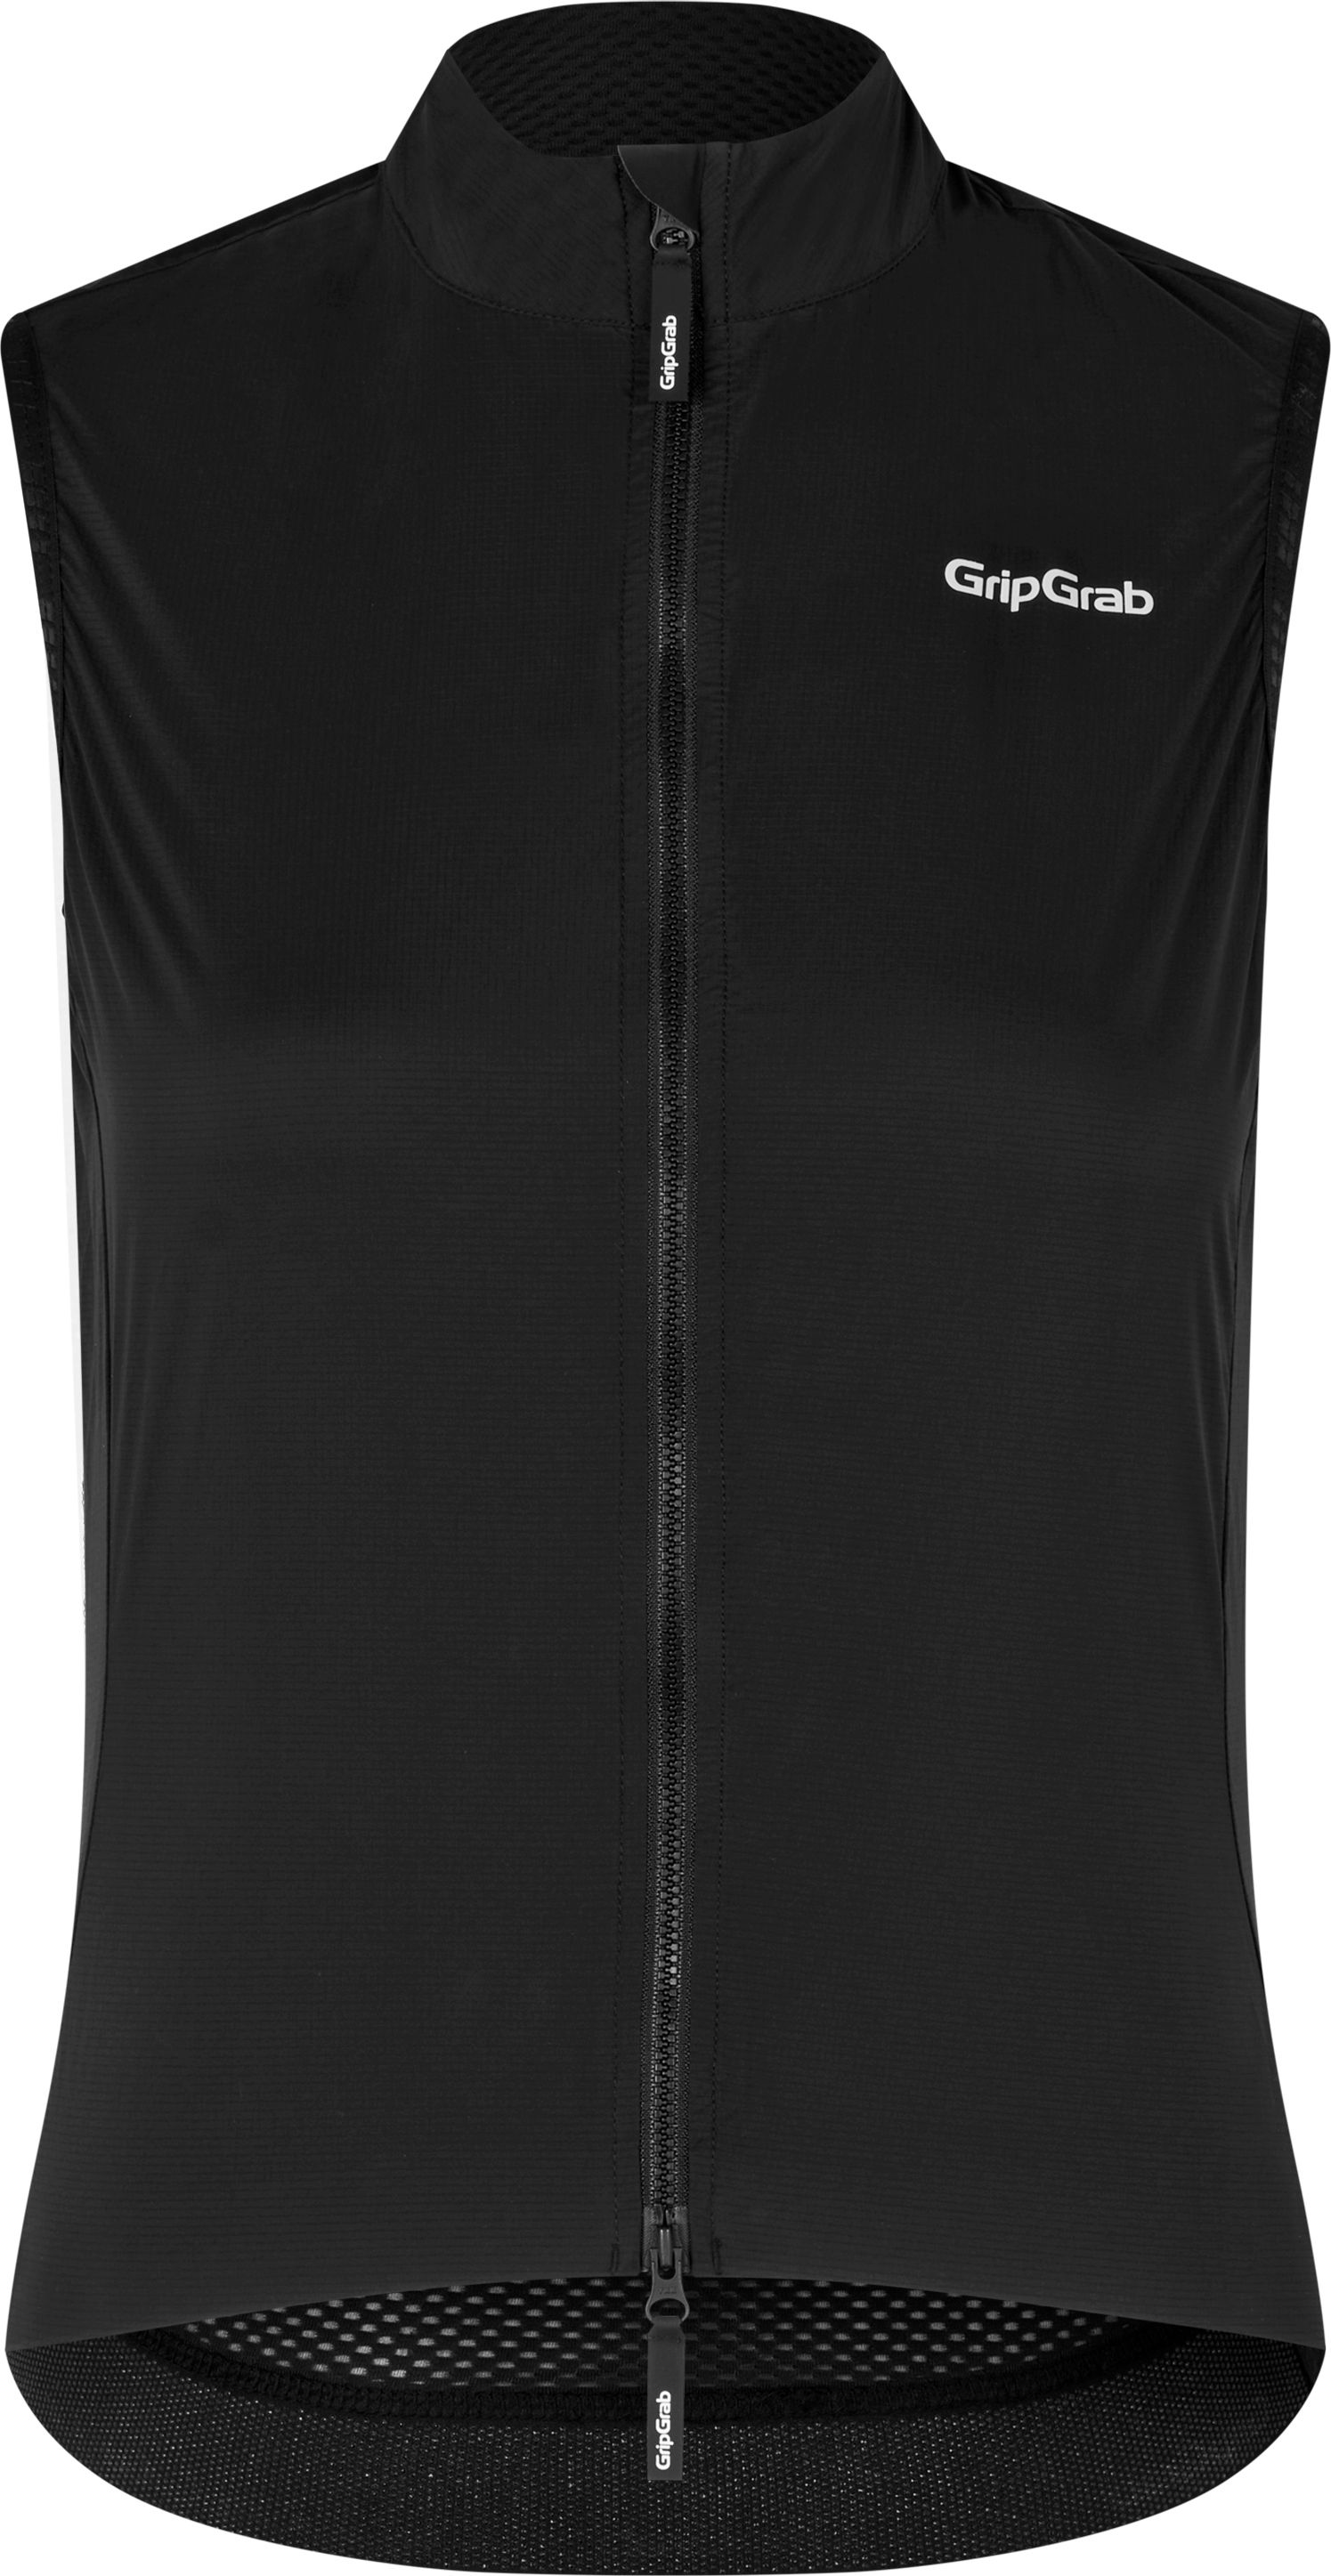 Gripgrab Women's WindBuster Windproof Lightweight Vest Black